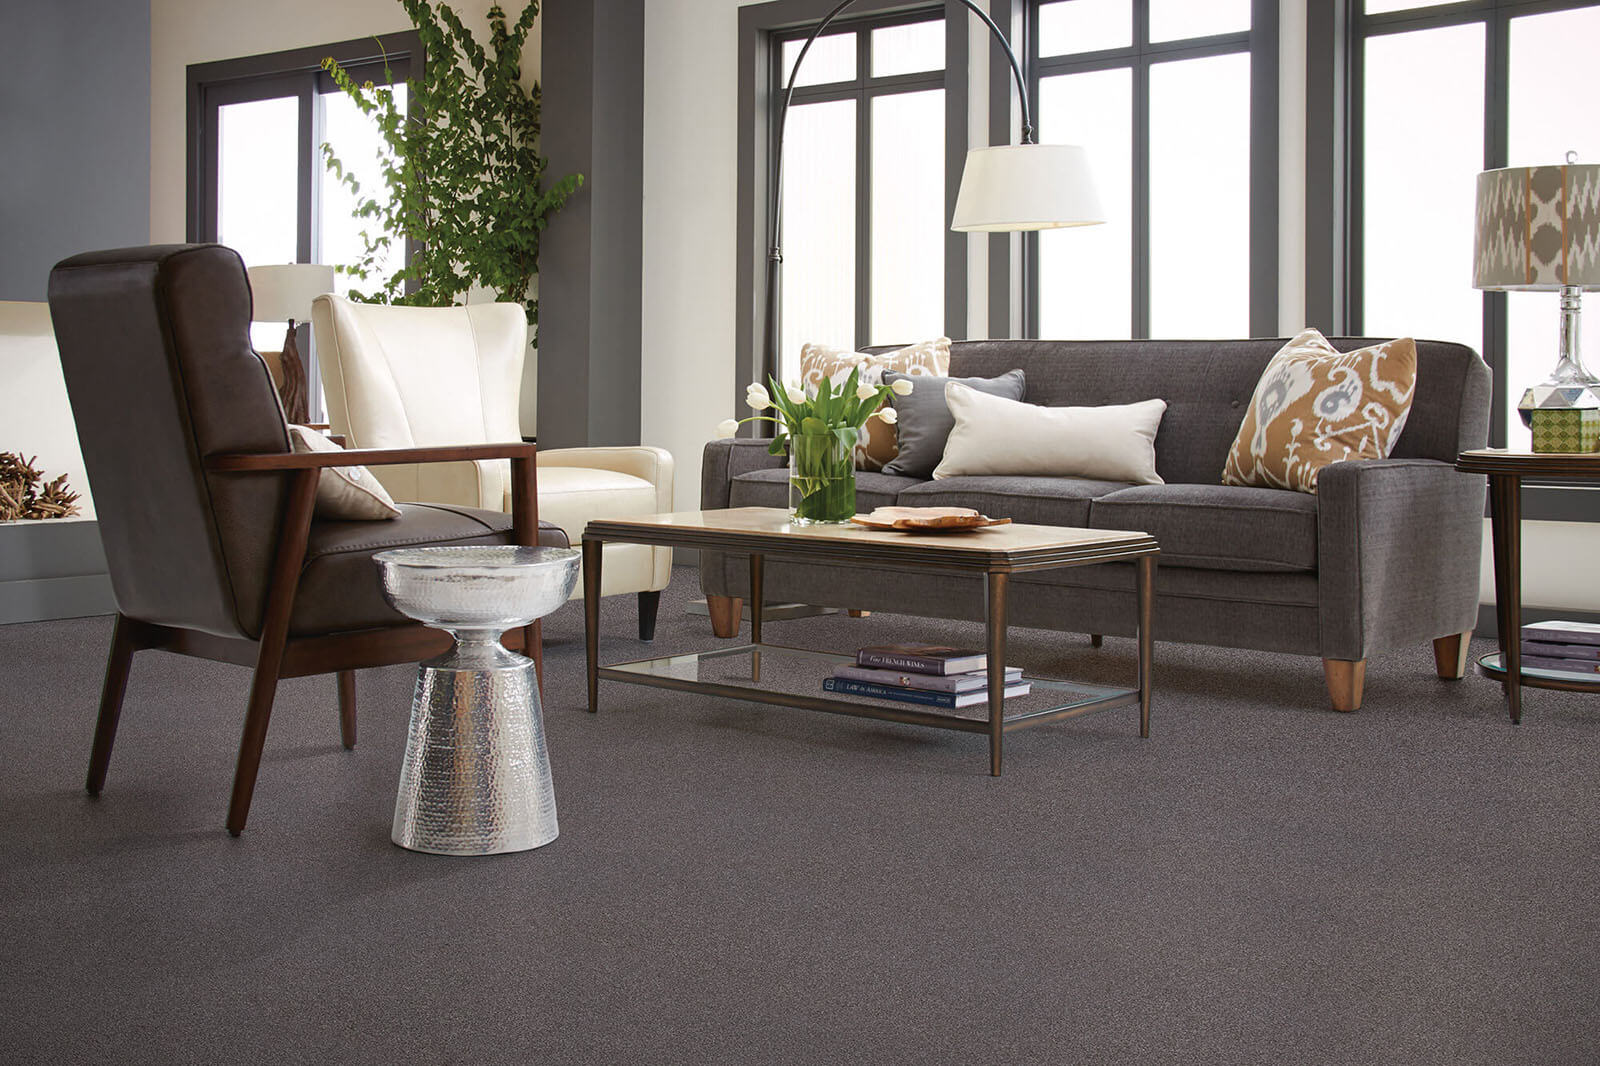 Living room interior design | The L&L Company